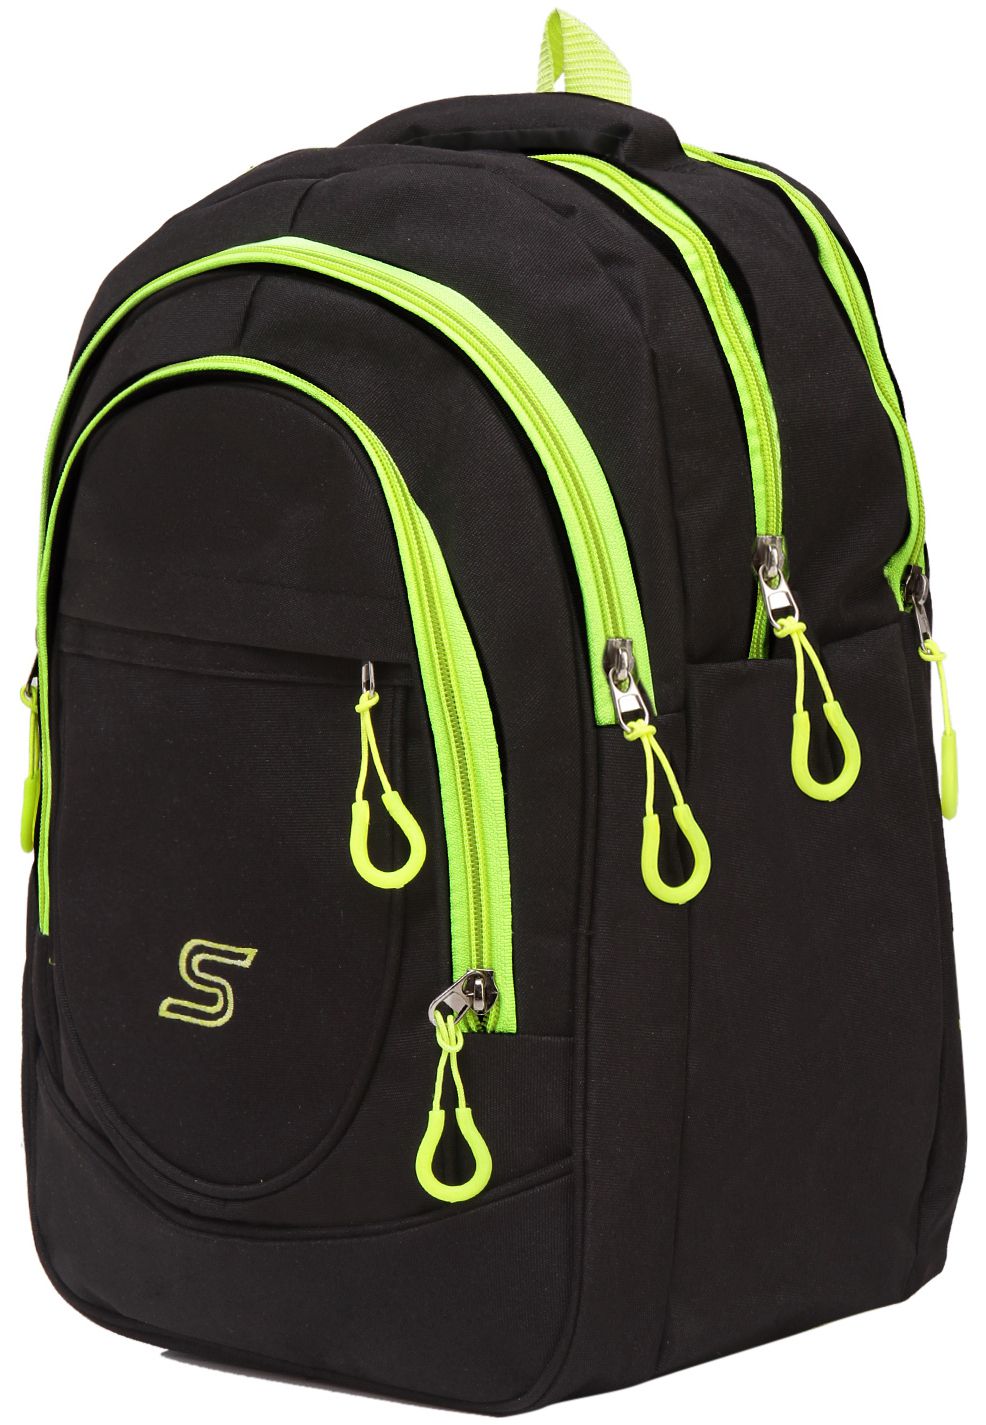 school bag - Buy school bag Online at Low Price - Snapdeal